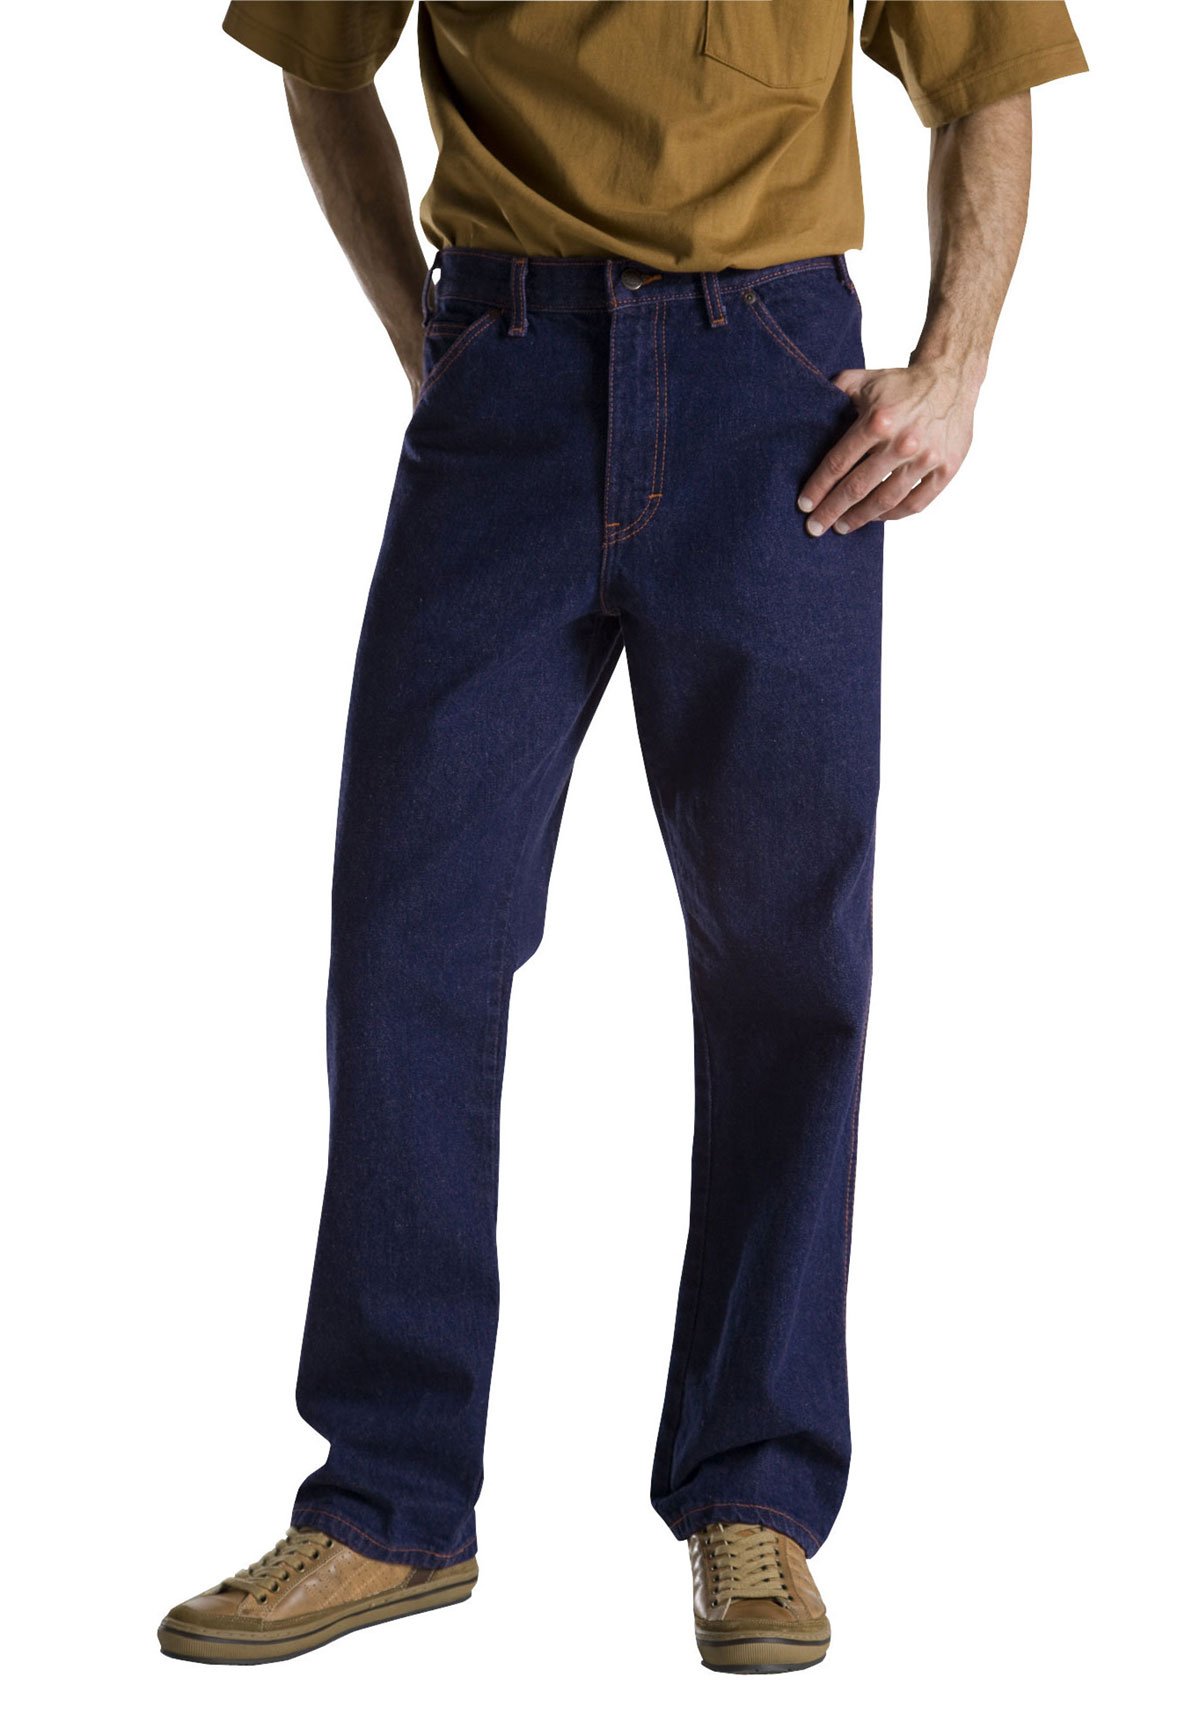 Dickies Men's Regular-Fit 5-Pocket Jean (Indigo Blue or Stone Washed Indigo Blue) $20.99 + Free Shipping w/ Prime or on $35+